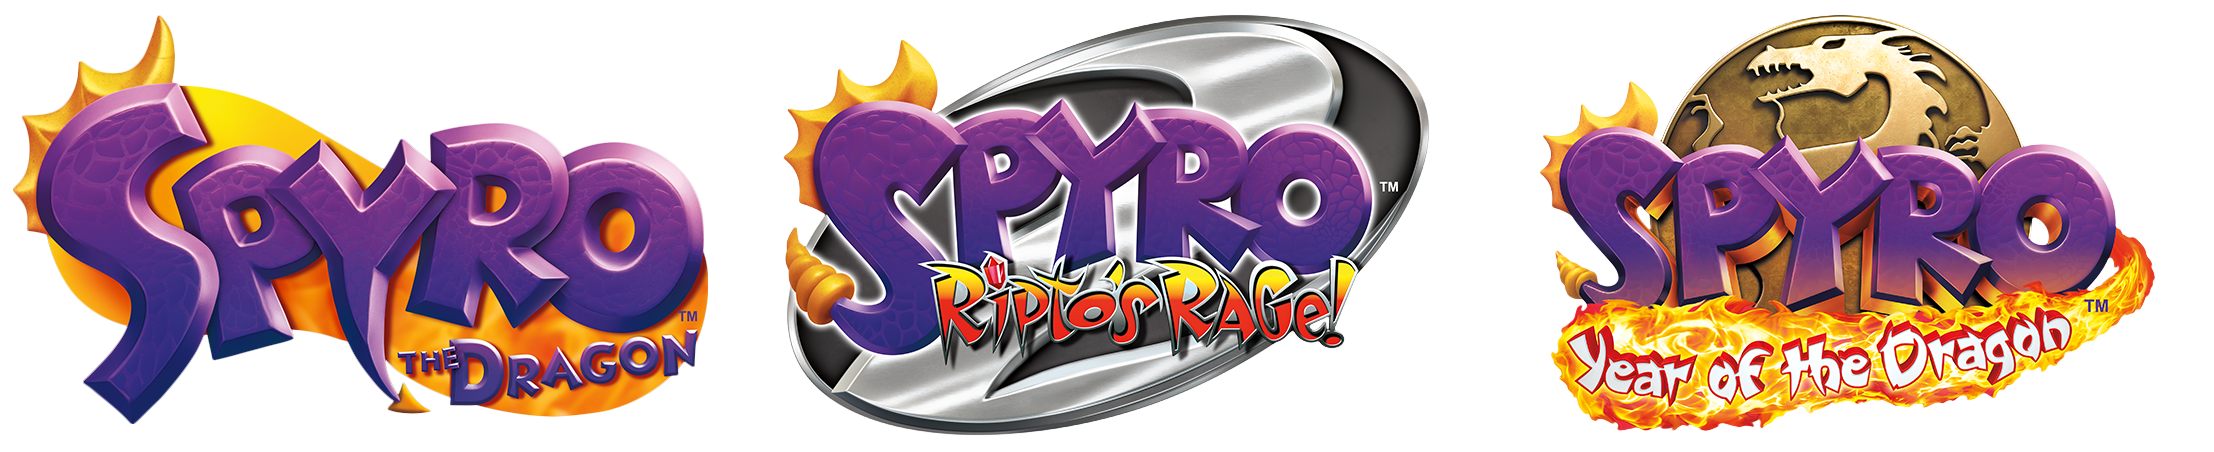 Spyro Reignited Trilogy - Game Logos